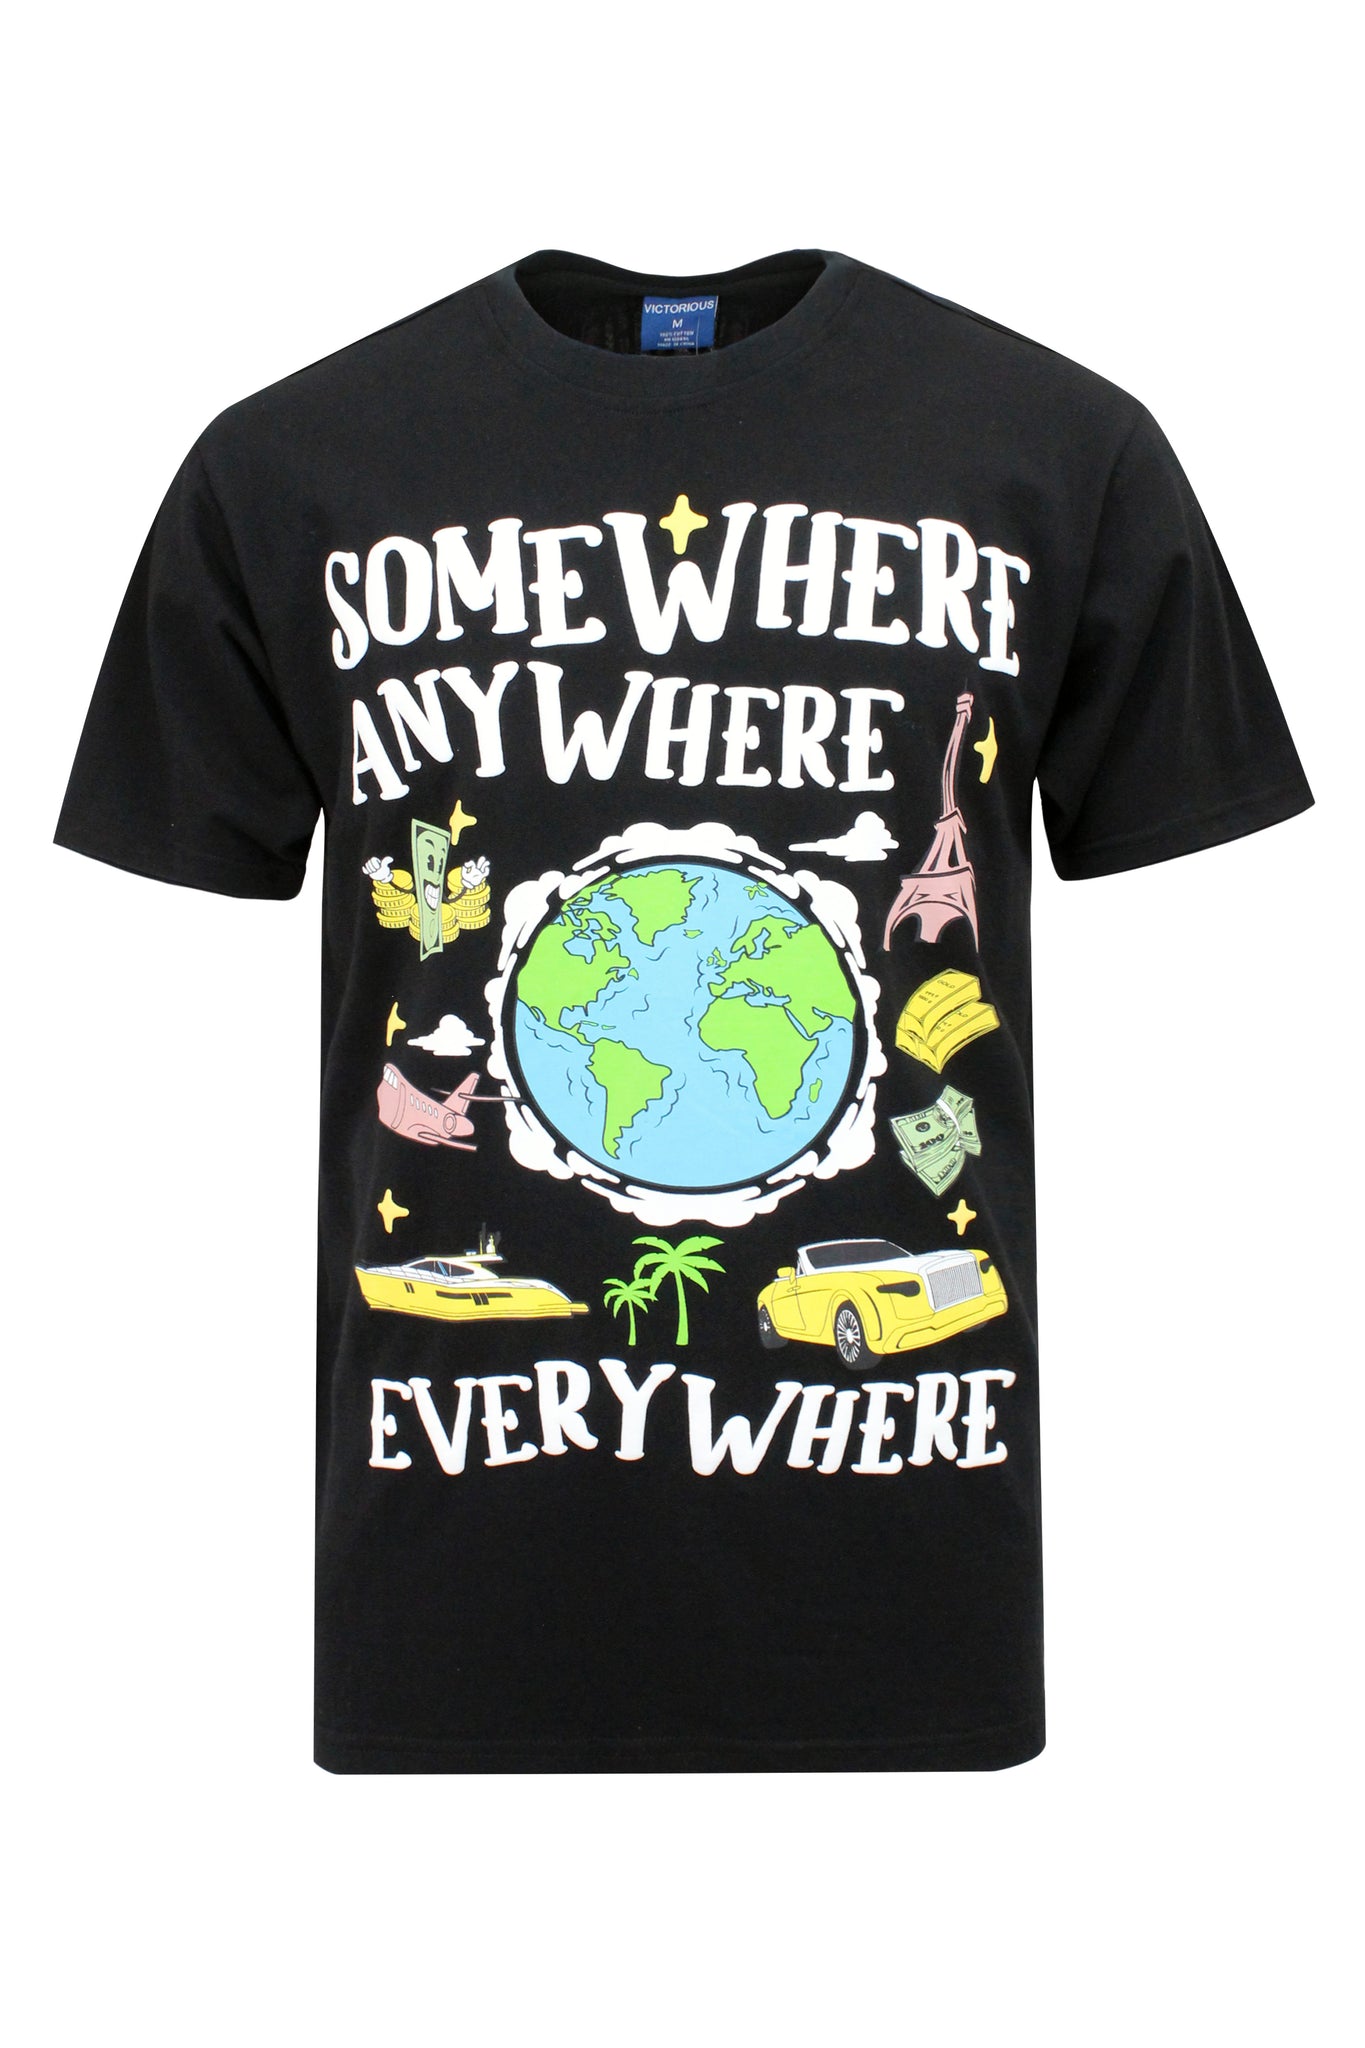 Somewhere T-shirts